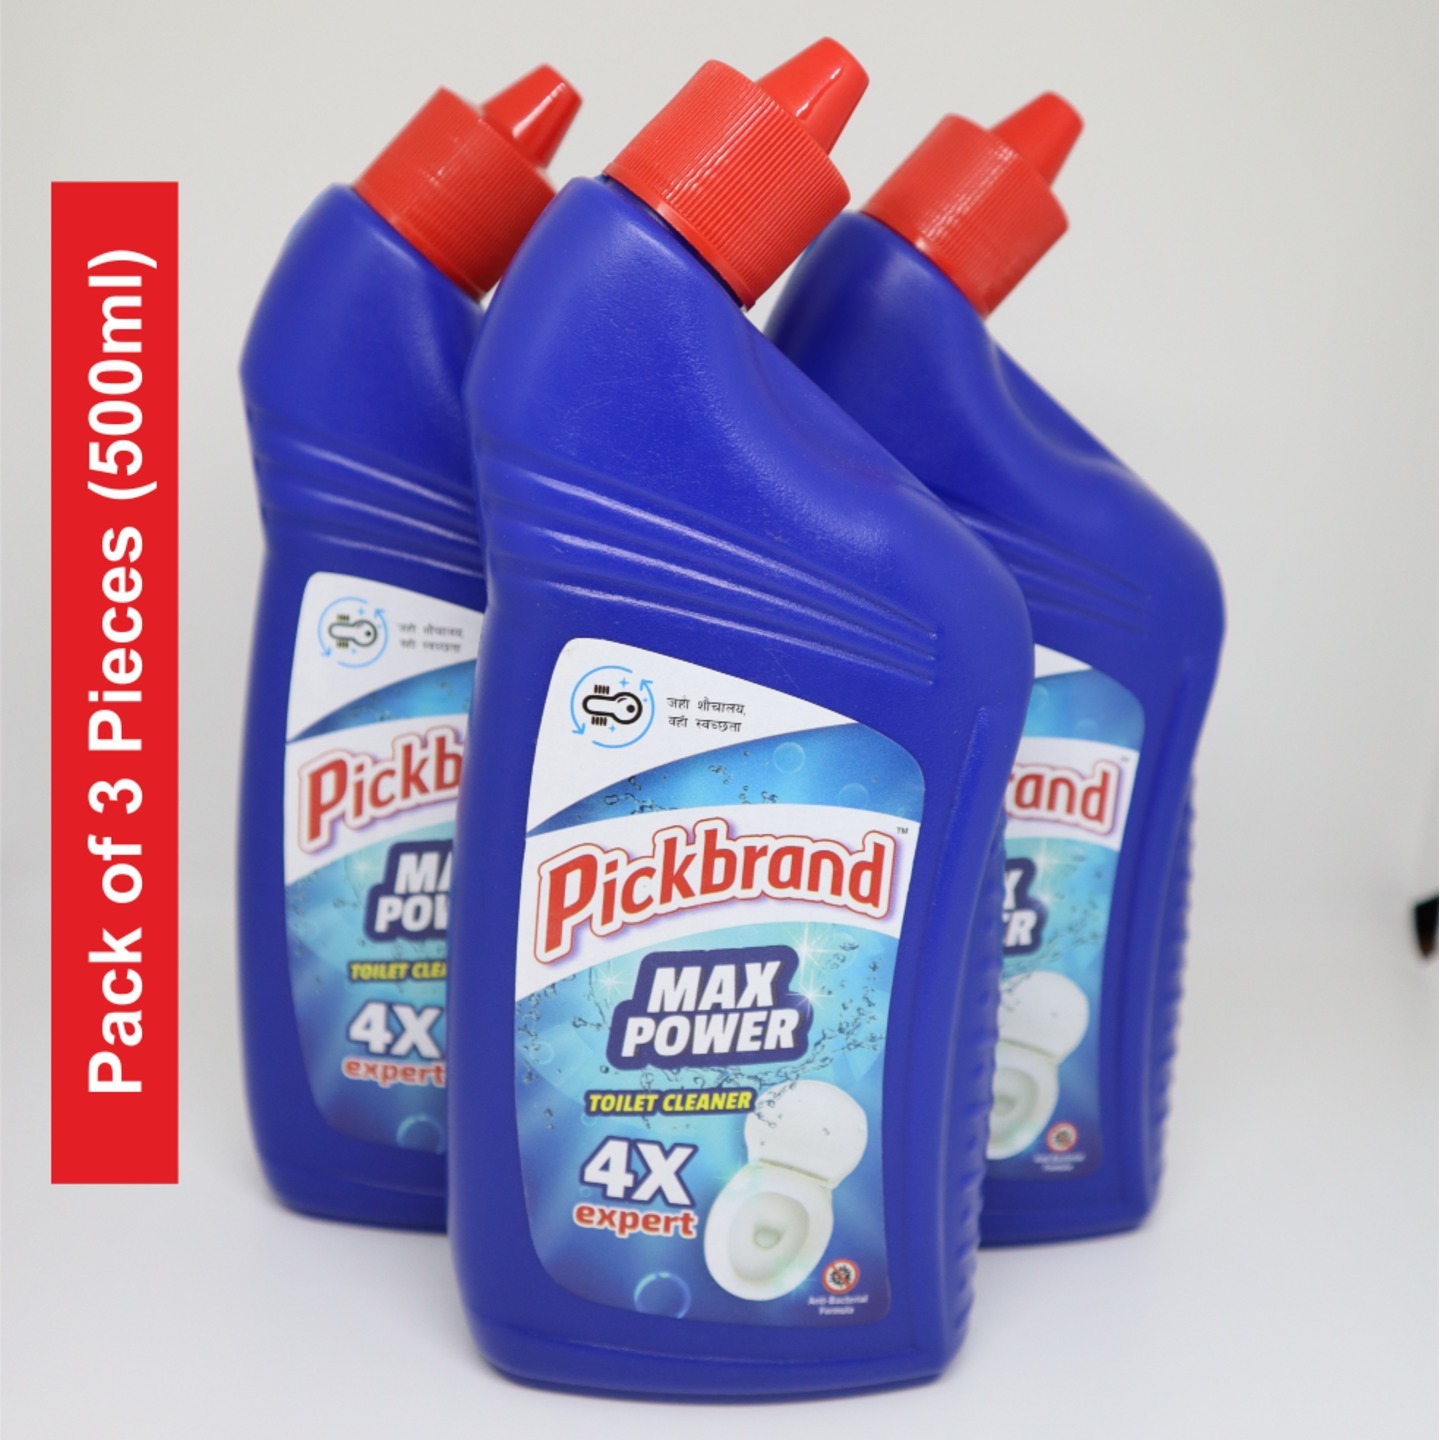 Pickbrand Max Power Toilet Cleaner- Pack of 500ml BUY 2 GET 1 FREE